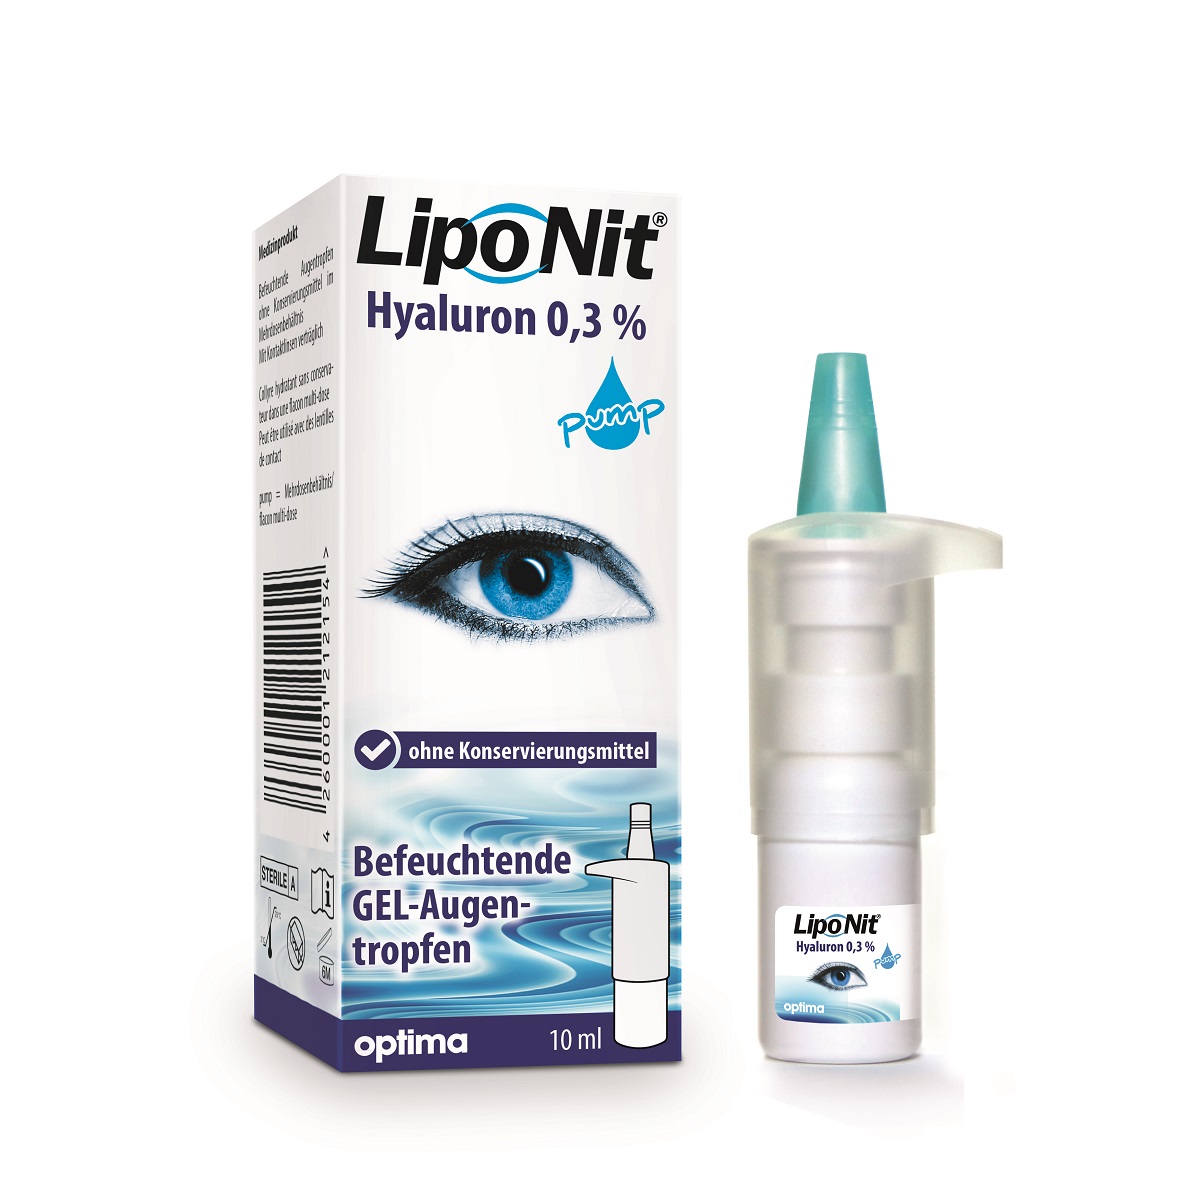 Featured image for “LIPONIT Augentropfen 0,3% (pump) 10 ml”